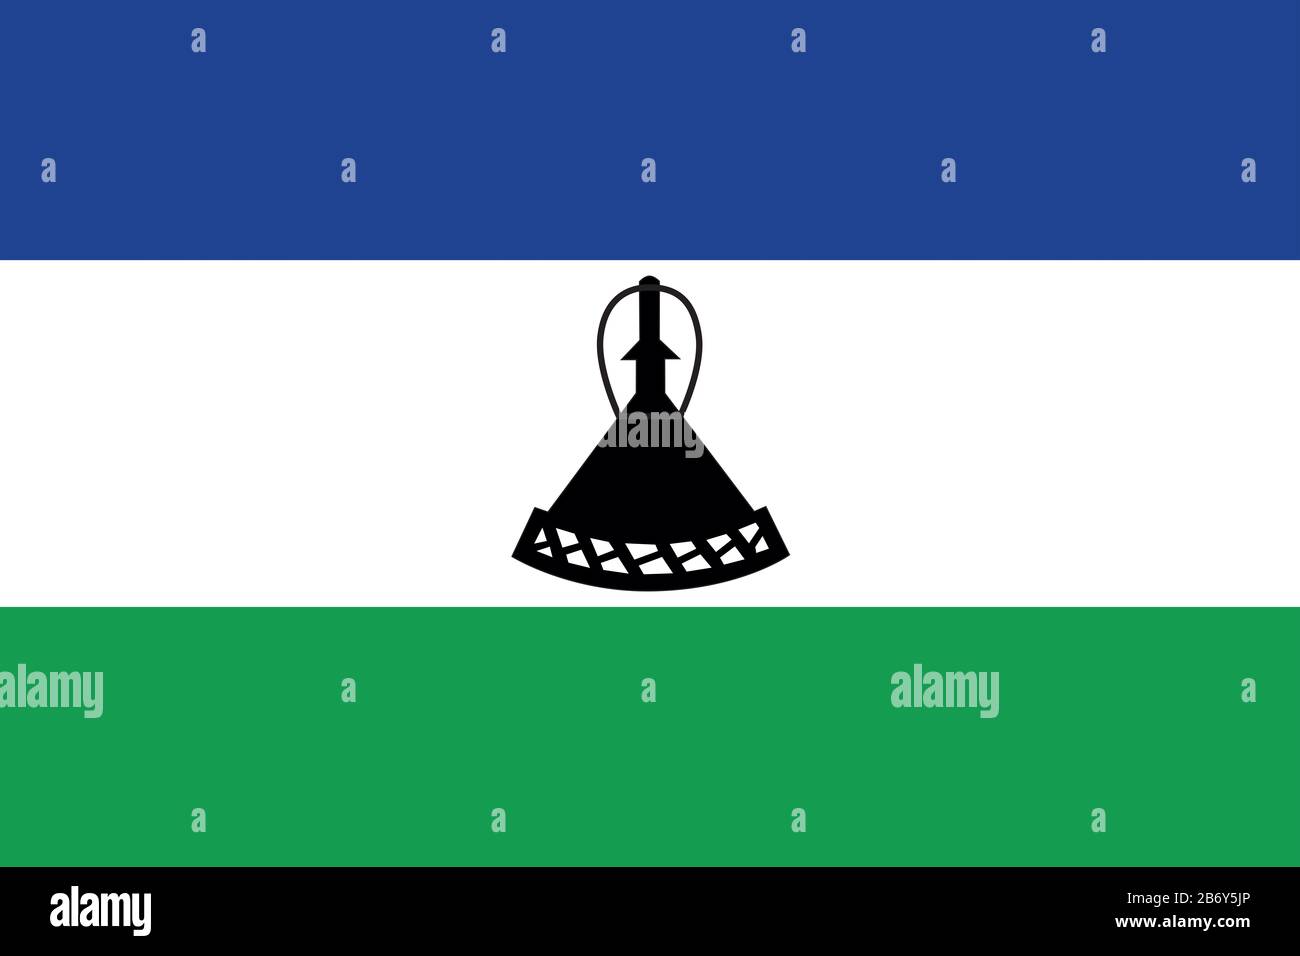 Flagge von Lesotho - Standardverhältnis der Lesoth-Fahne - True RGB-Farbmodus Stockfoto